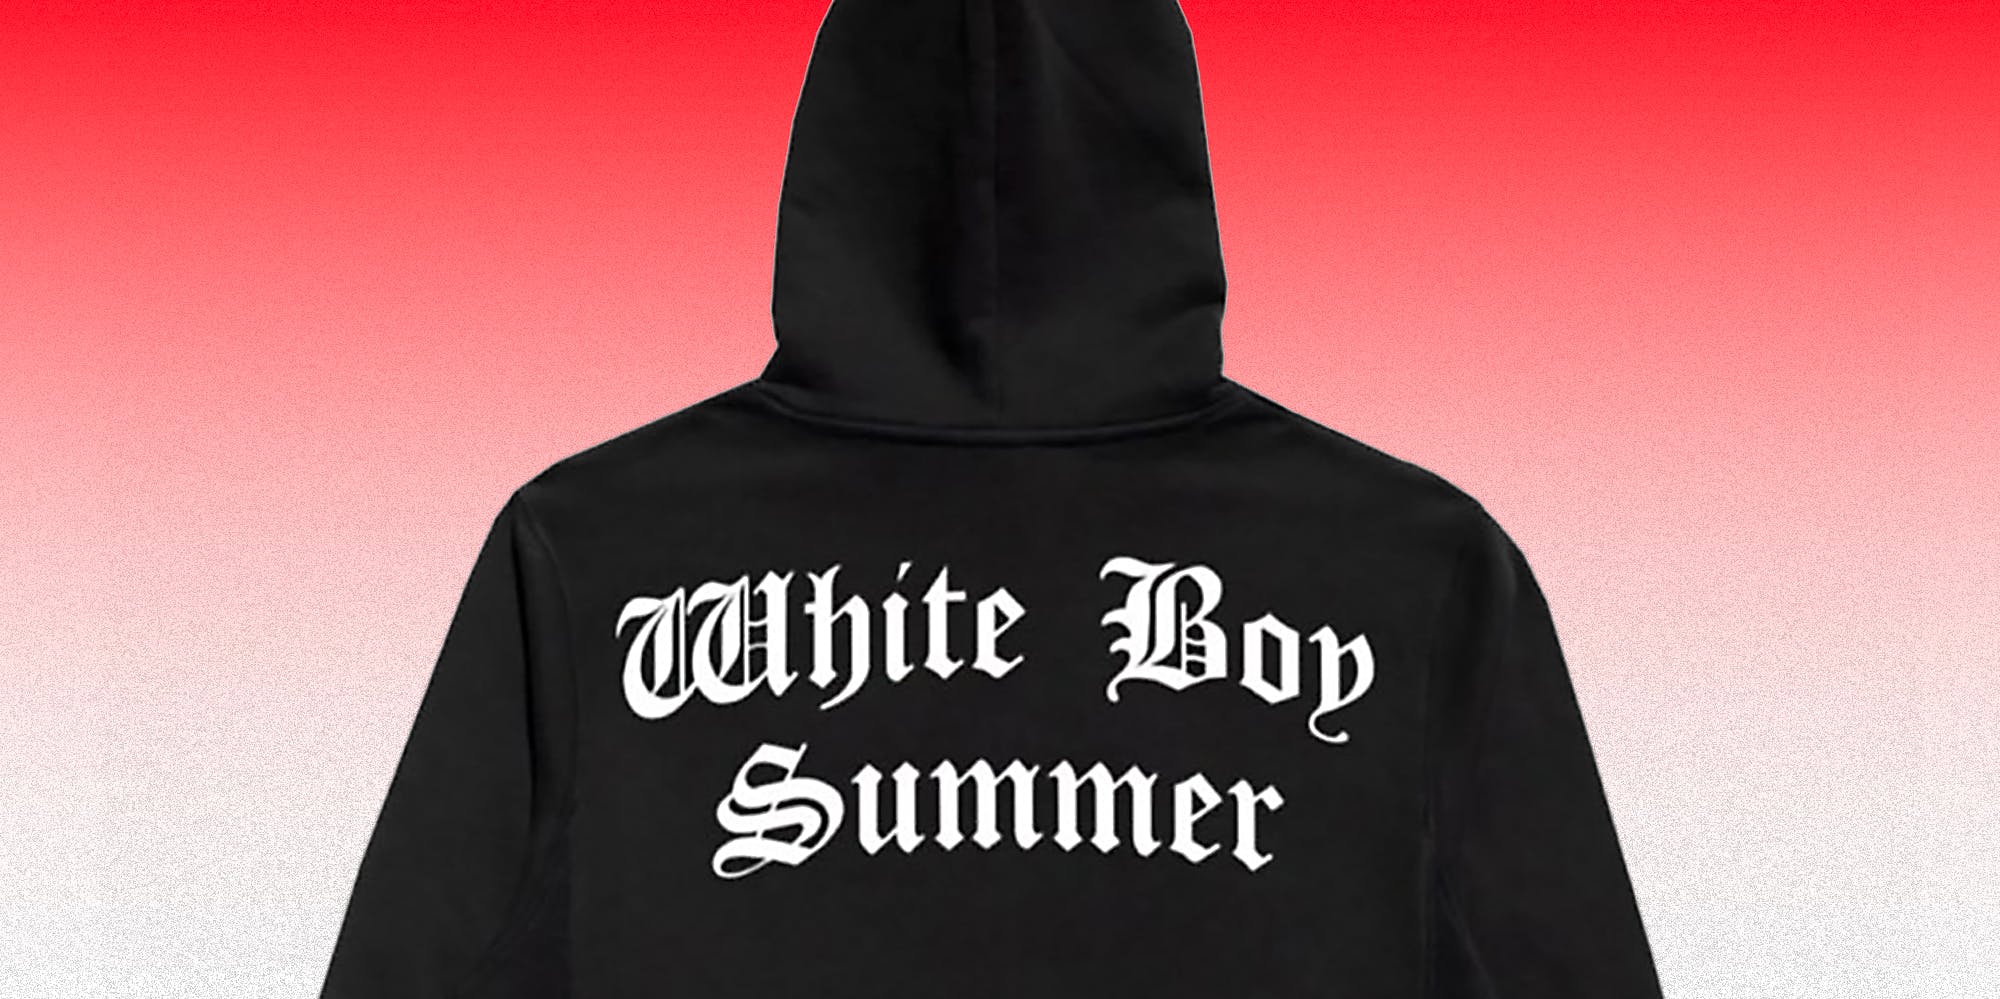 A black hoodie that has 'White Boy Summer' written on it.